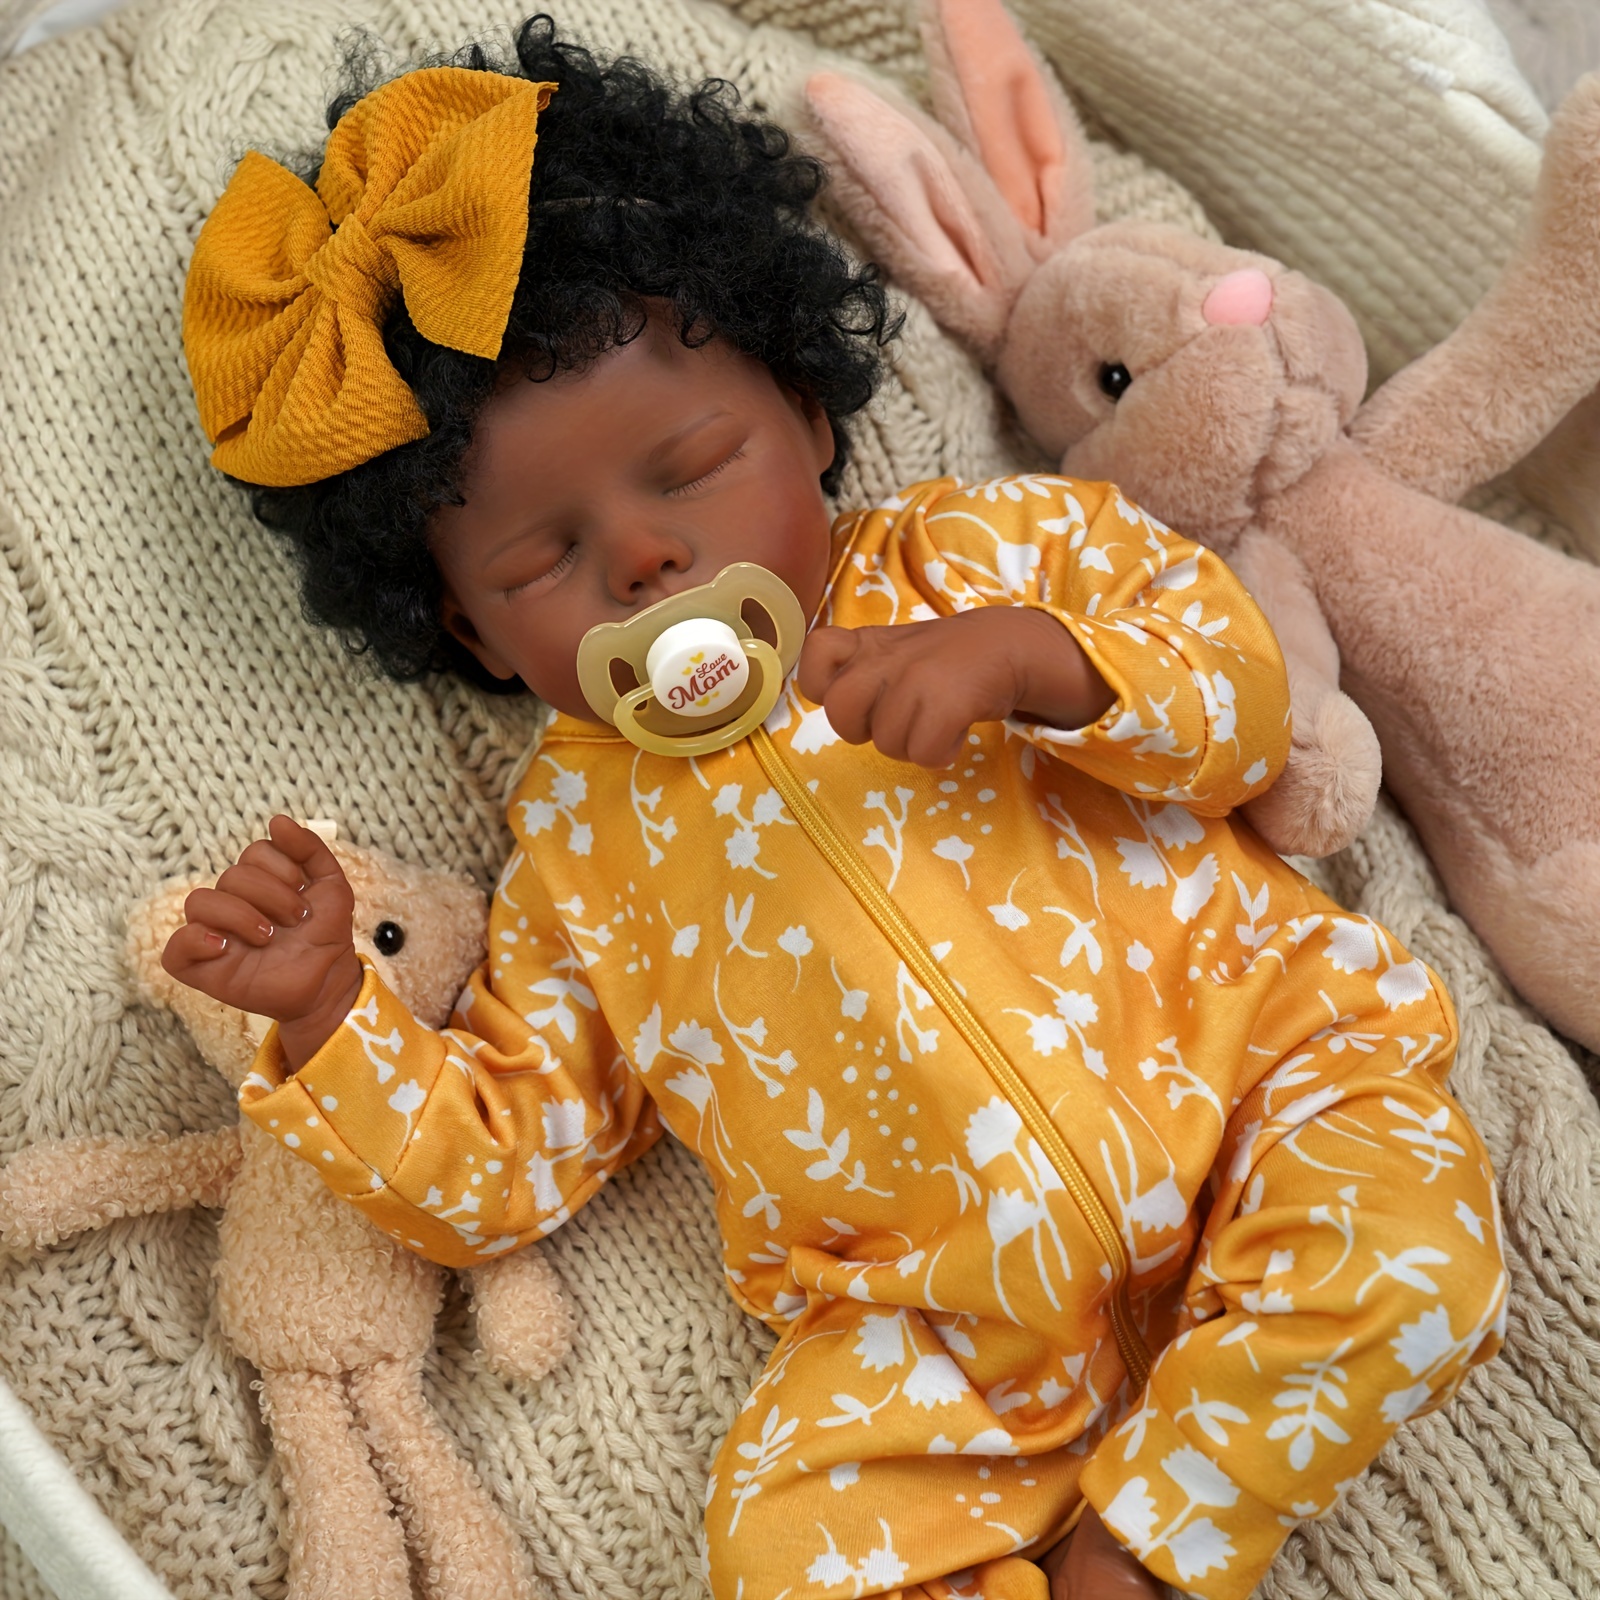 Lifelike Reborn Baby Sleeping Girl Doll 17 by BiBi DollThe Magic